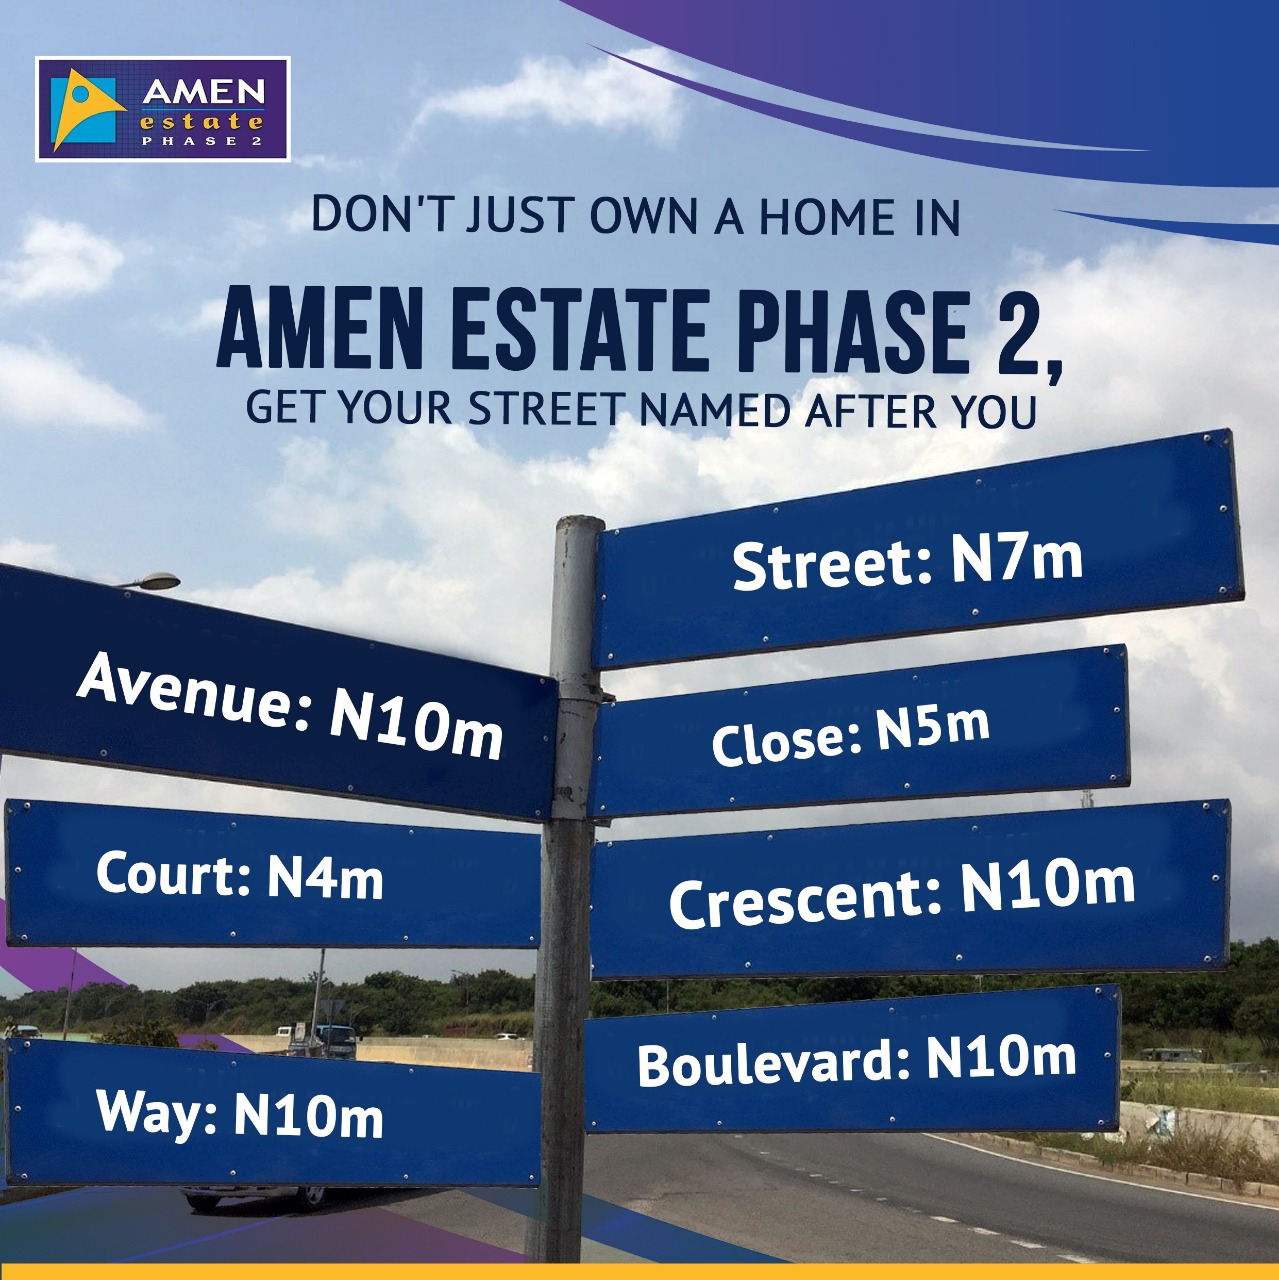 Amen estate phase 2